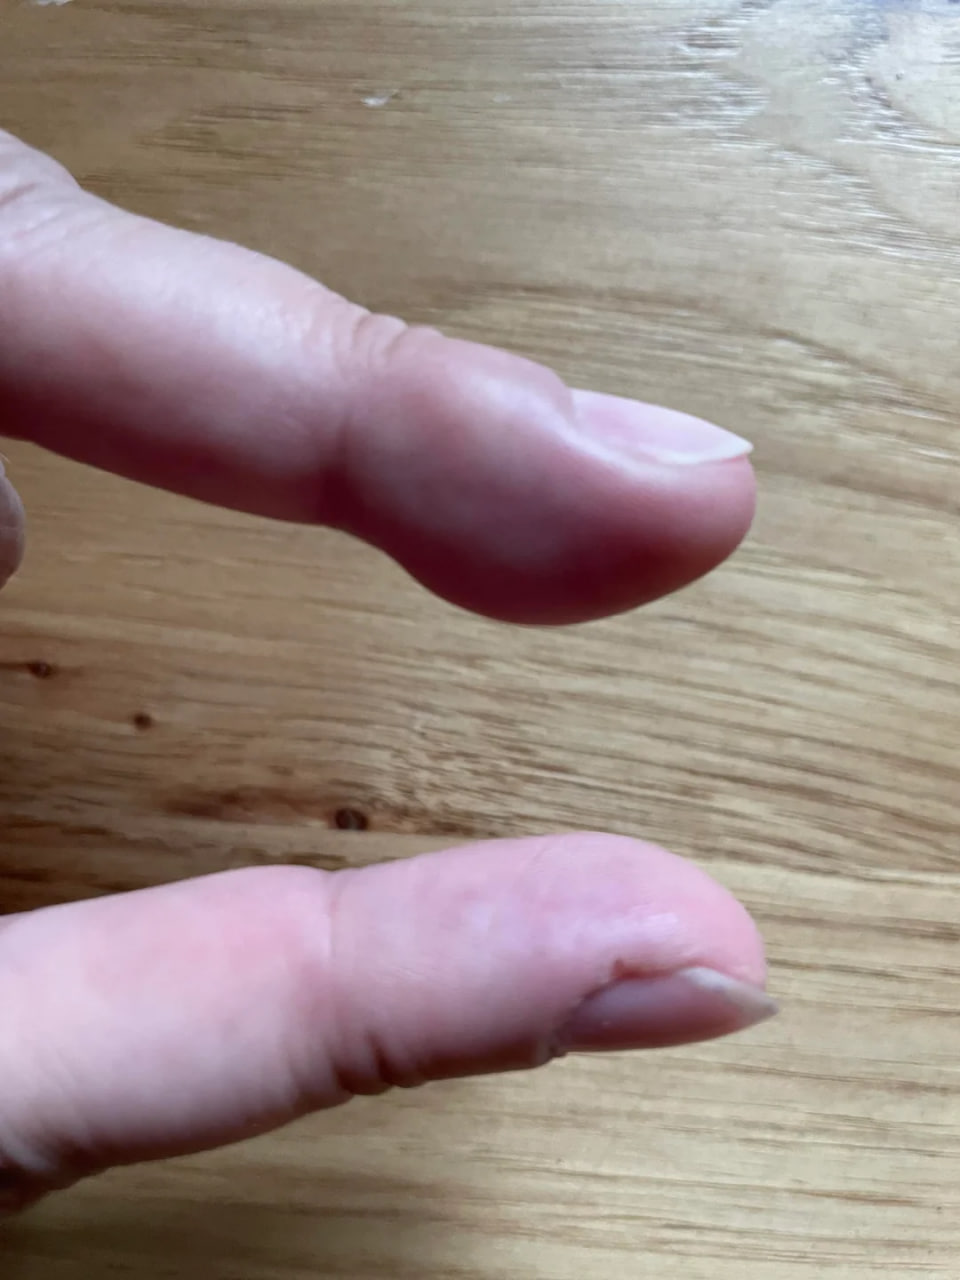 Шишка на пальце - женщина увидела нарост на руке и узнала о странном  диагнозе, фото | РБК Украина